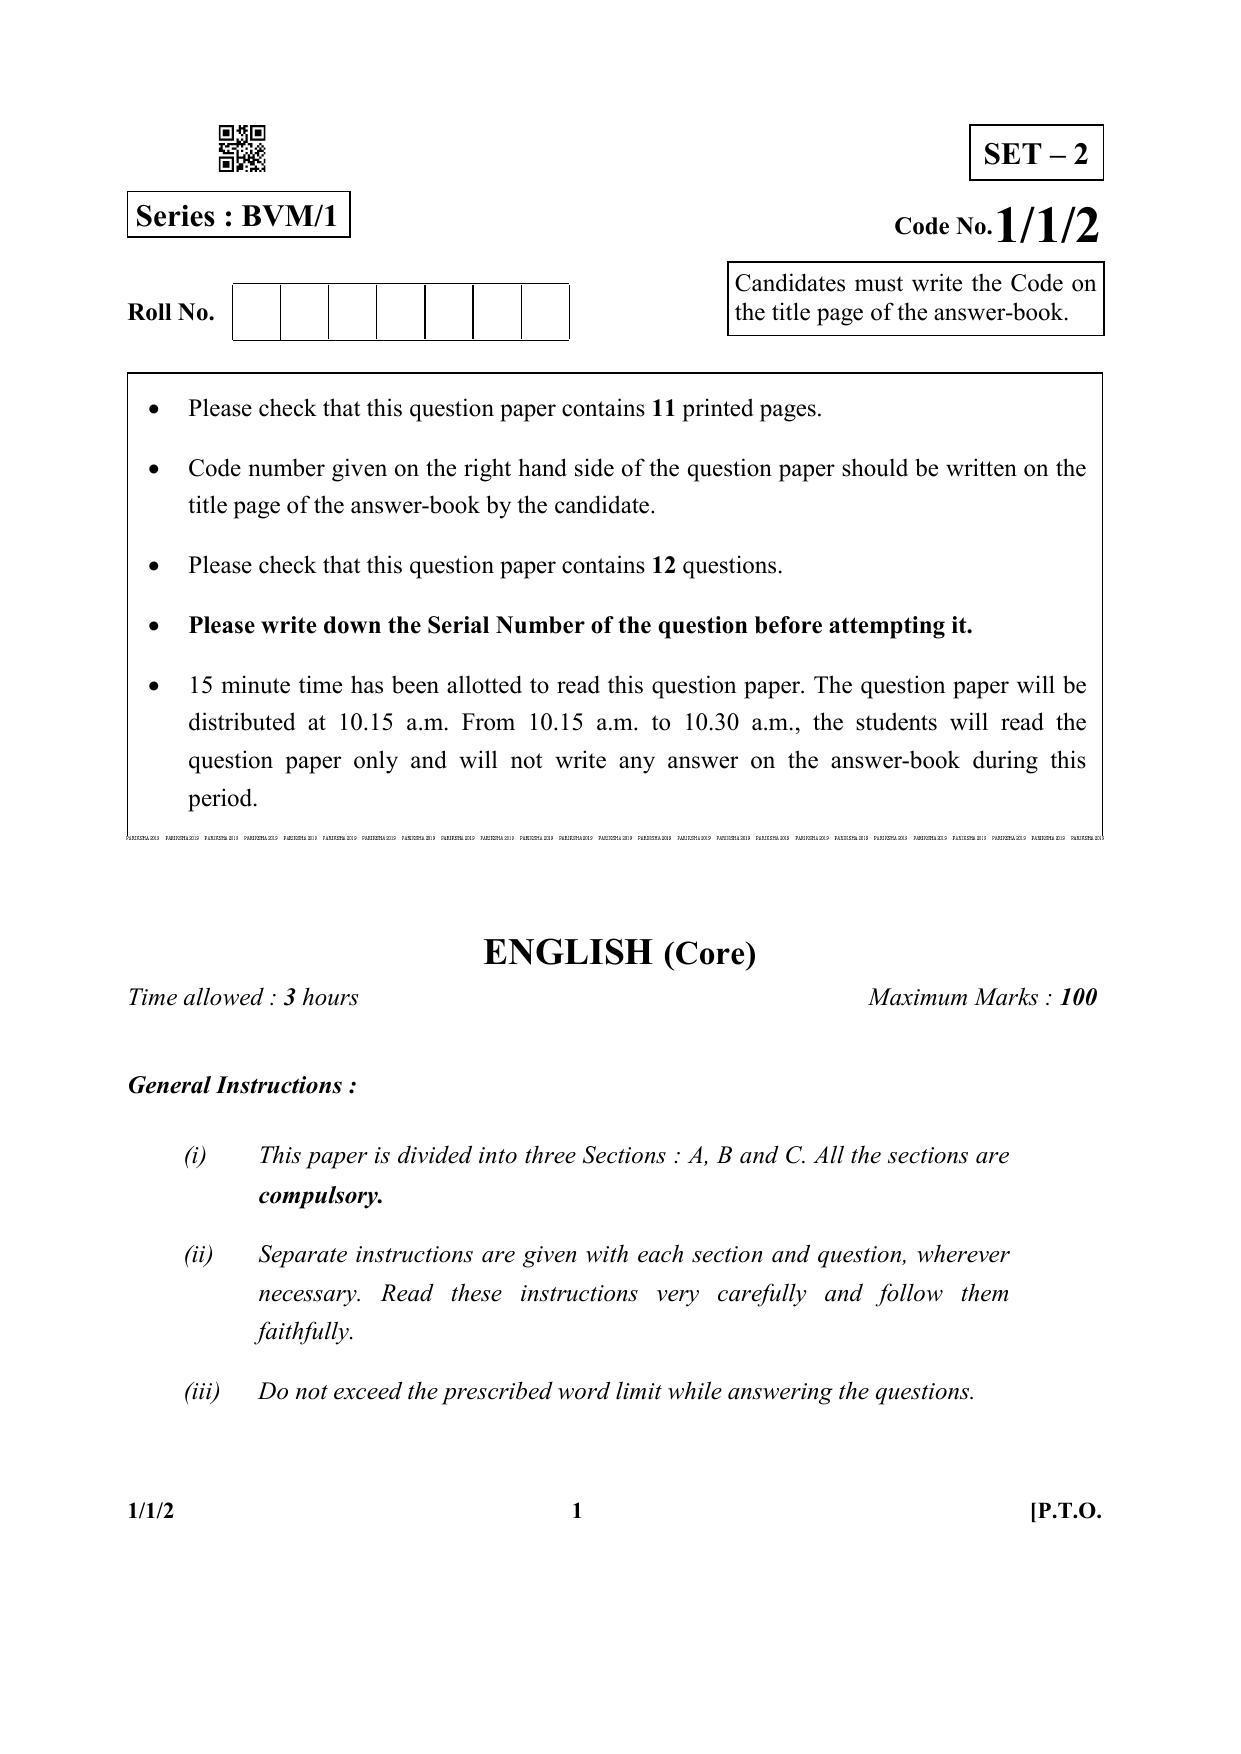 CBSE Class 12 1-1-2 (English Core) 2019 Question Paper - Page 1